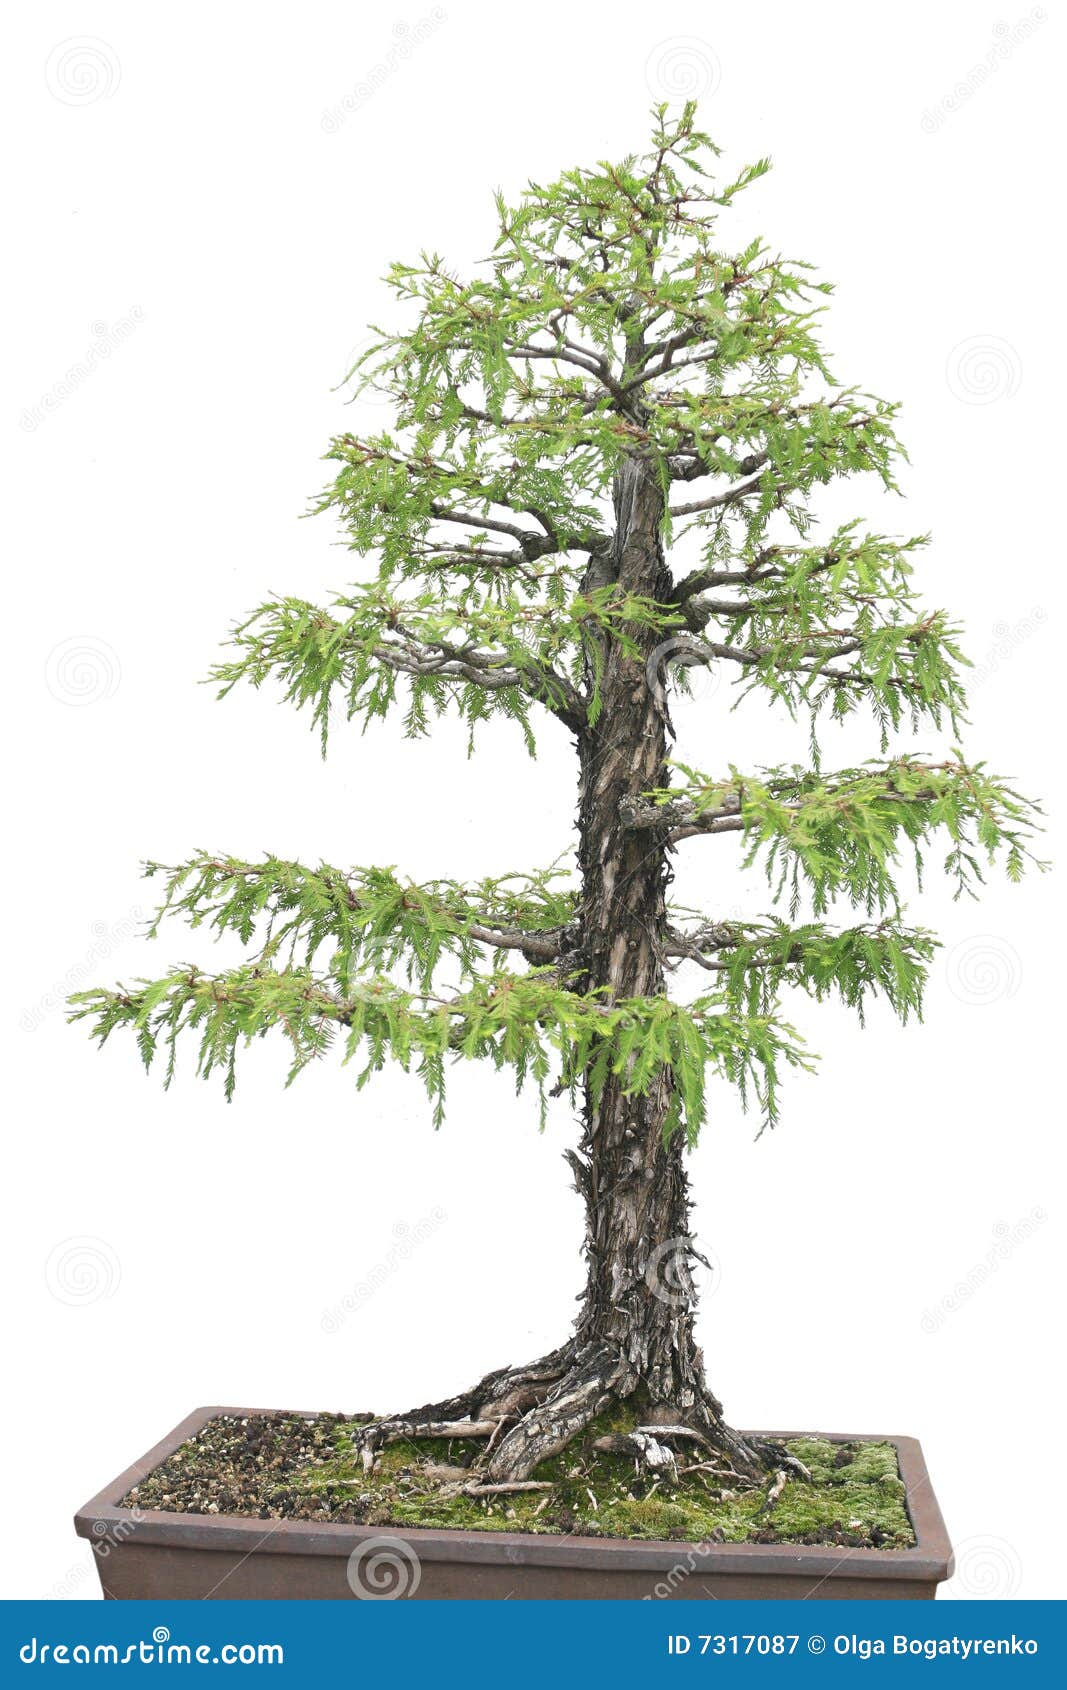 clip art cypress tree - photo #8